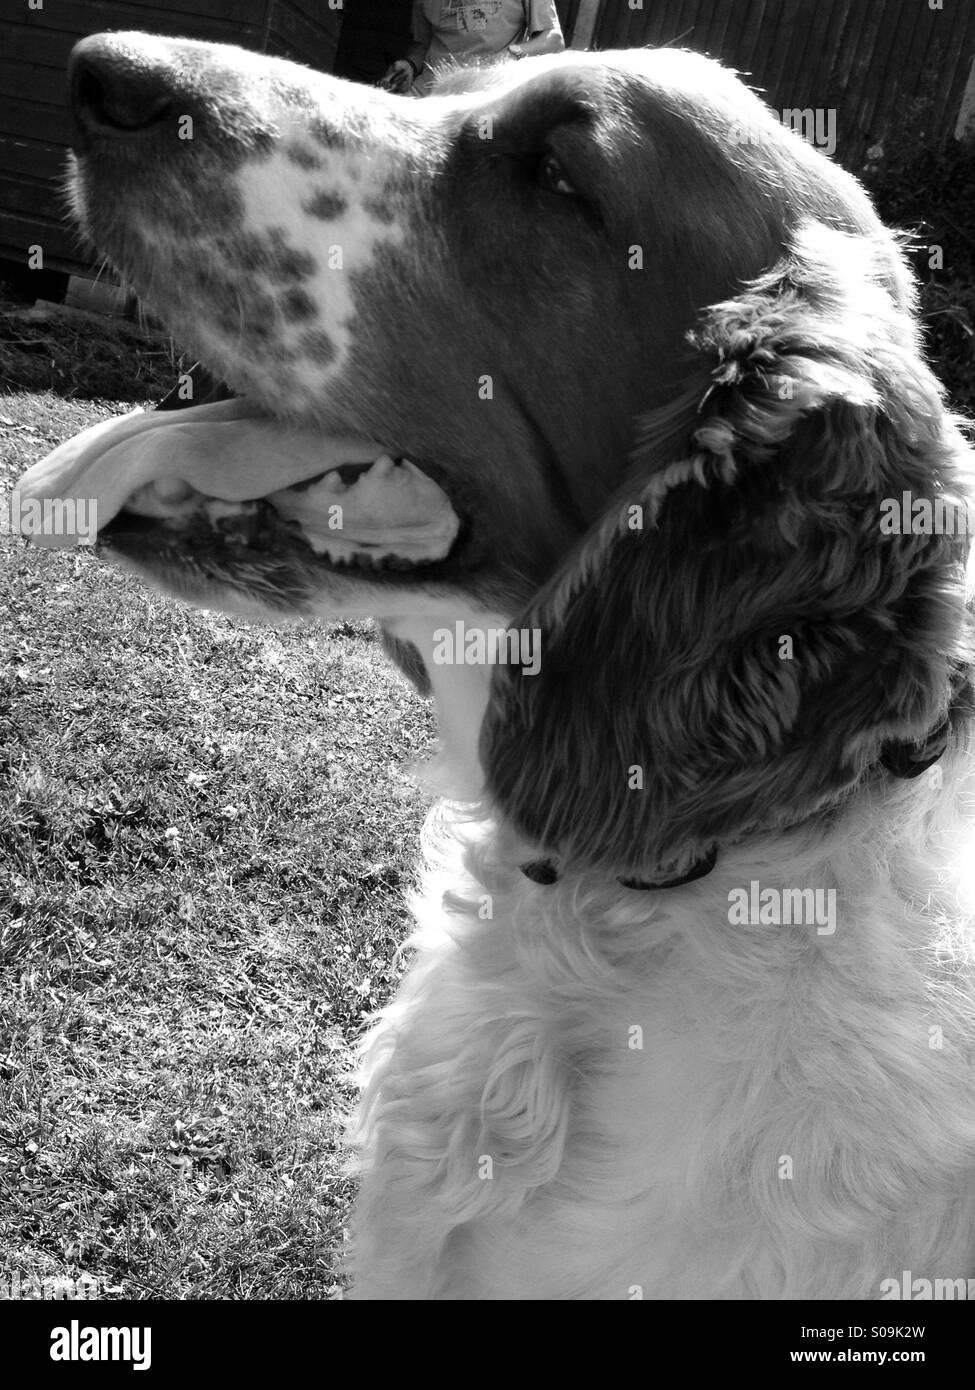 Panting welsh springer spaniel dog in black and white Stock Photo